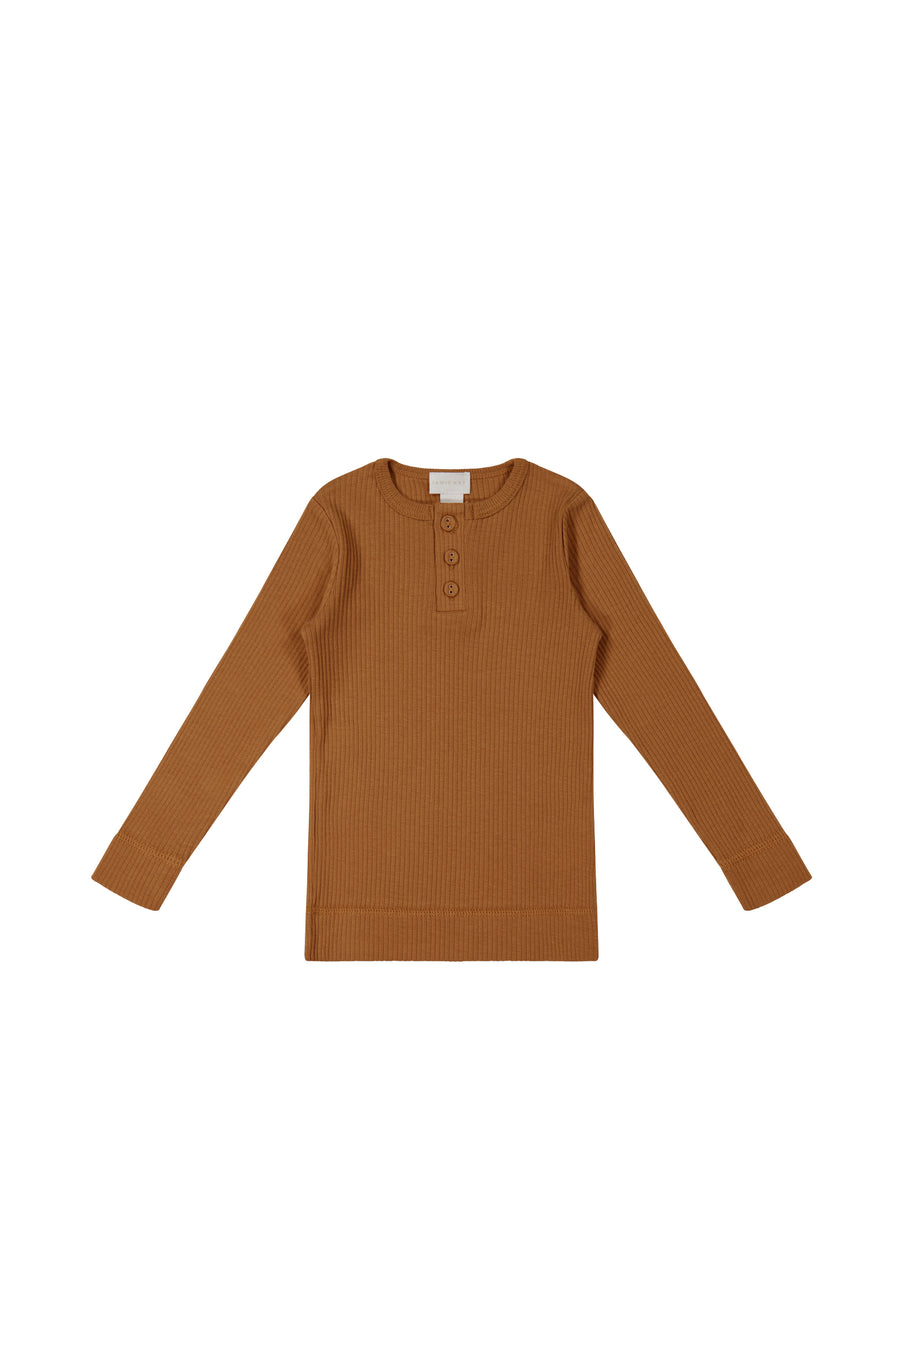 Organic Cotton Modal Long Sleeve Henley - Cinnamon Childrens Top from Jamie Kay NZ